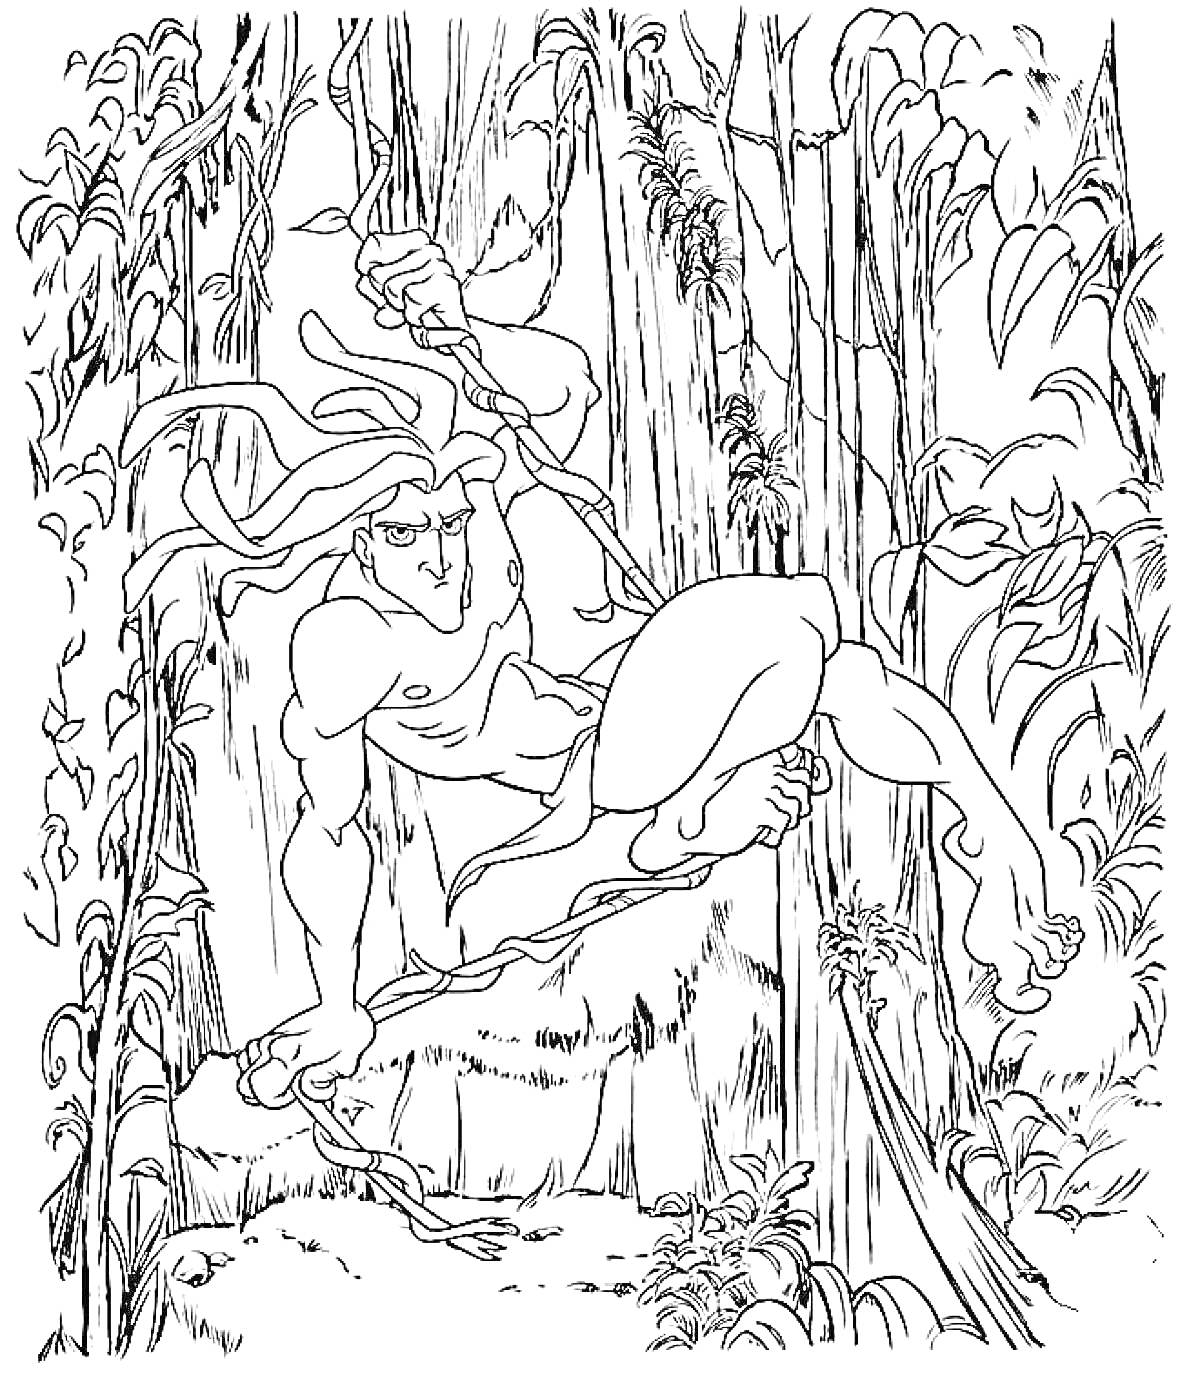 Тарзан, качающийся на лиане в джунглях